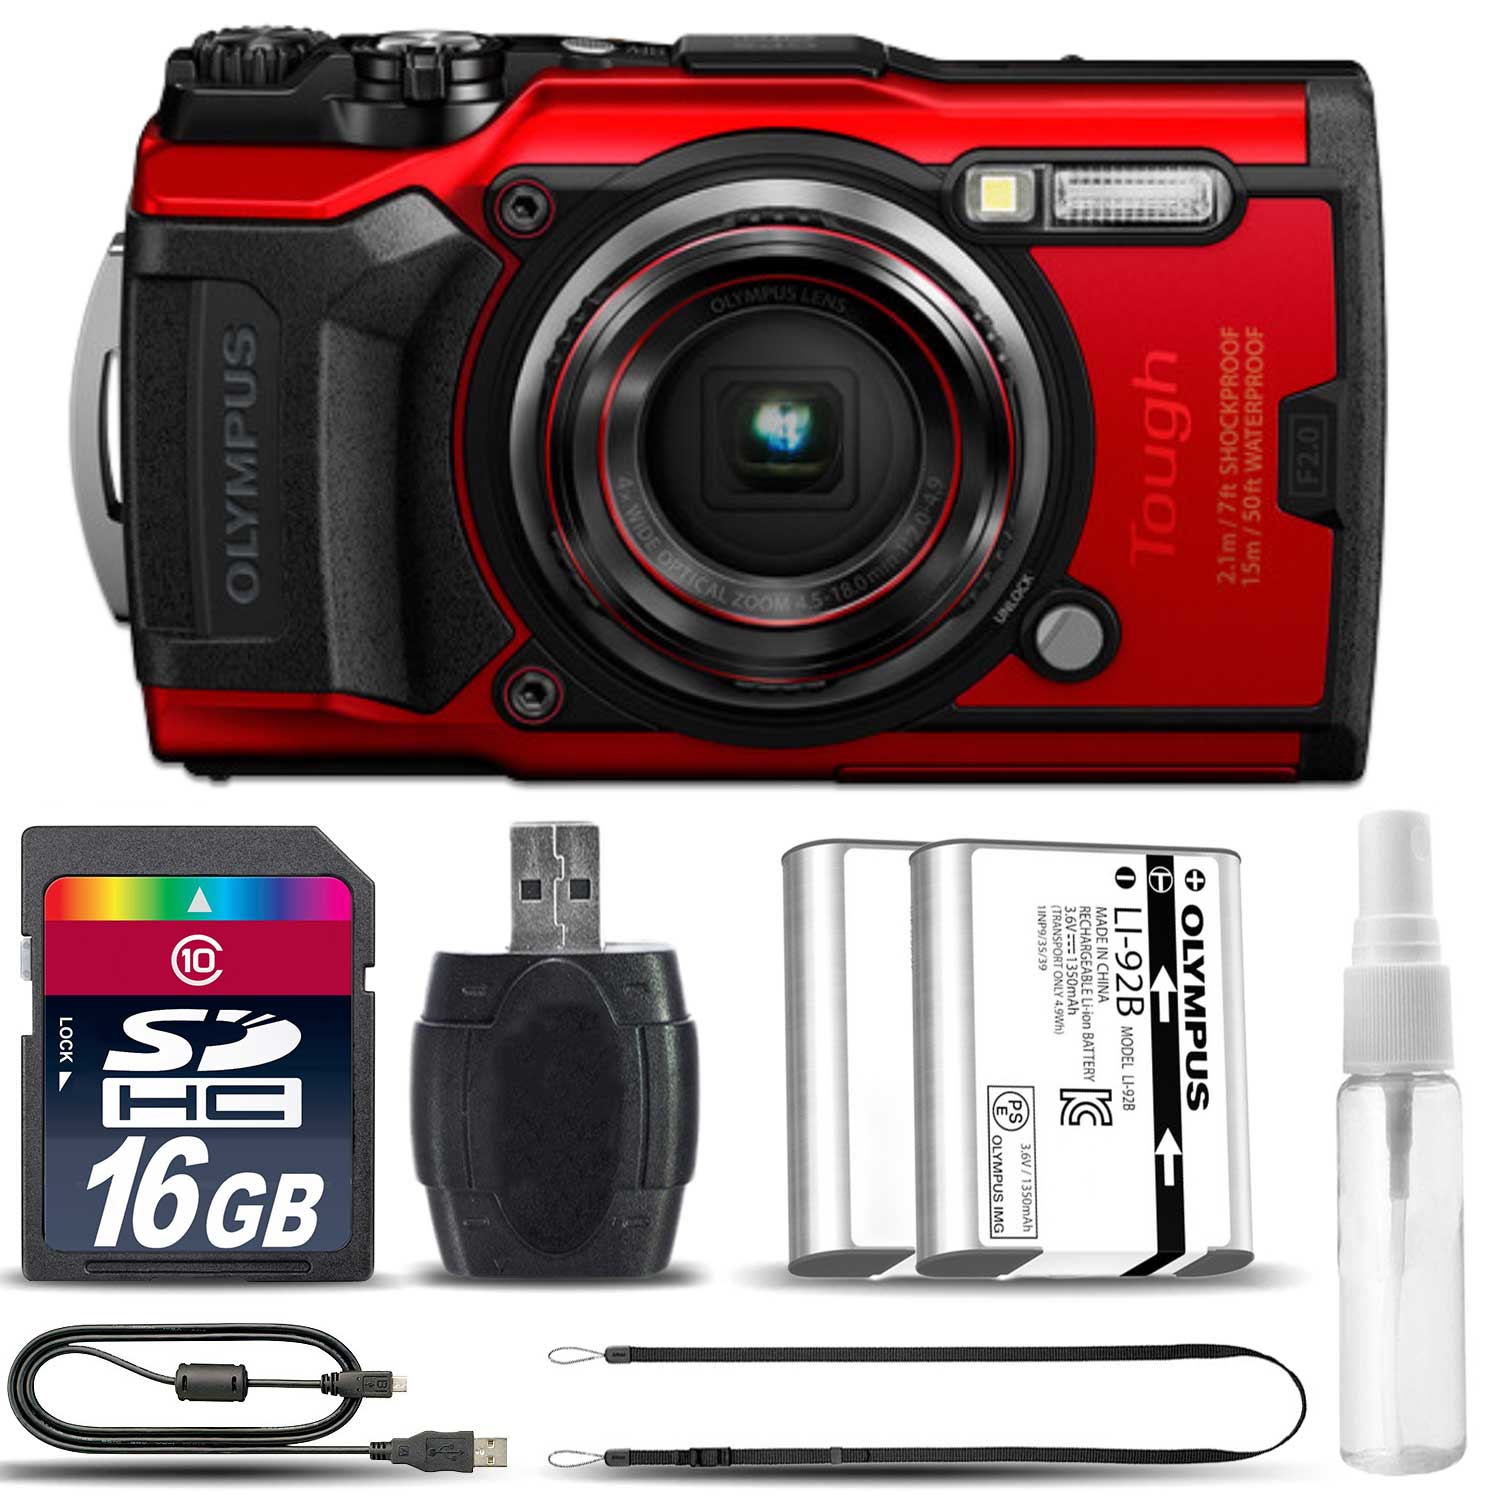 TOUGH TG-6 Digital Waterproof, WiFi Camera Red + Extra Battery - 16GB Kit *FREE SHIPPING*